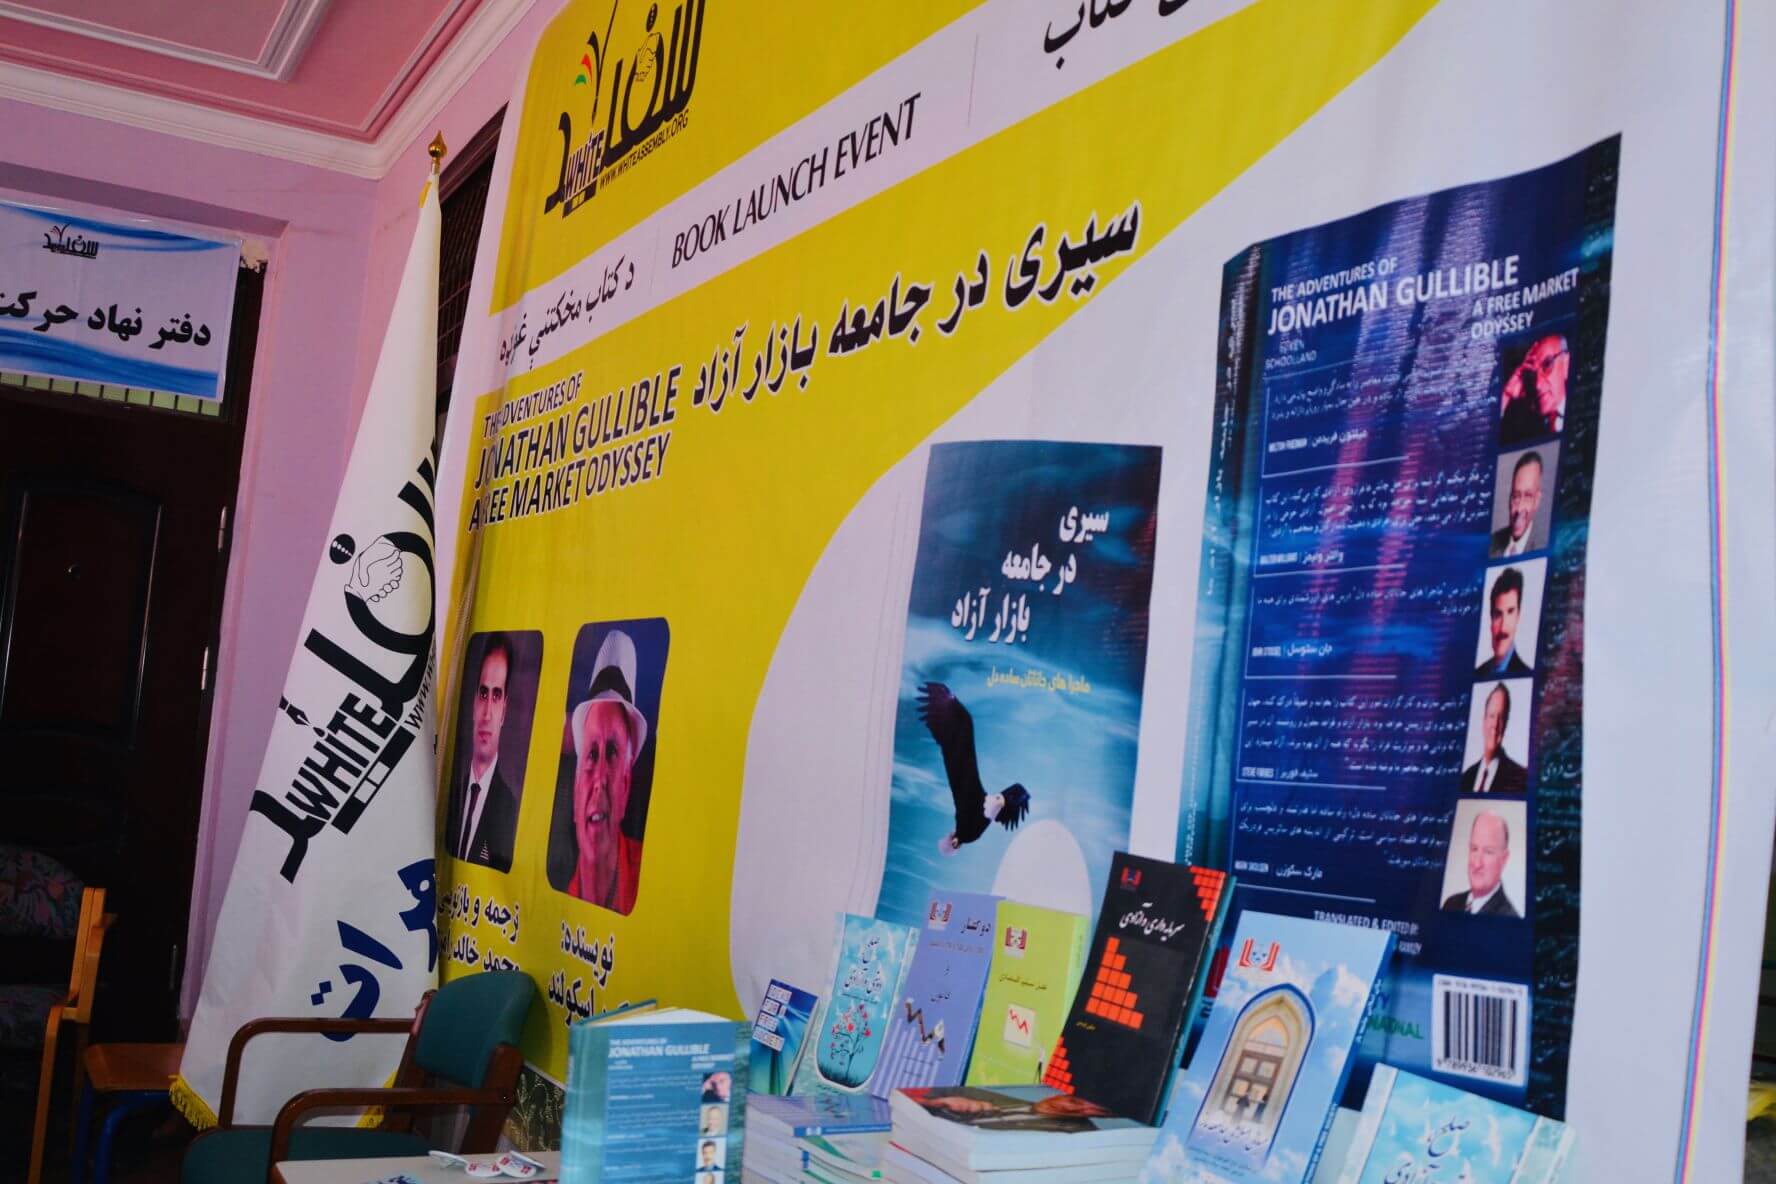 JG book banner in Herat Province